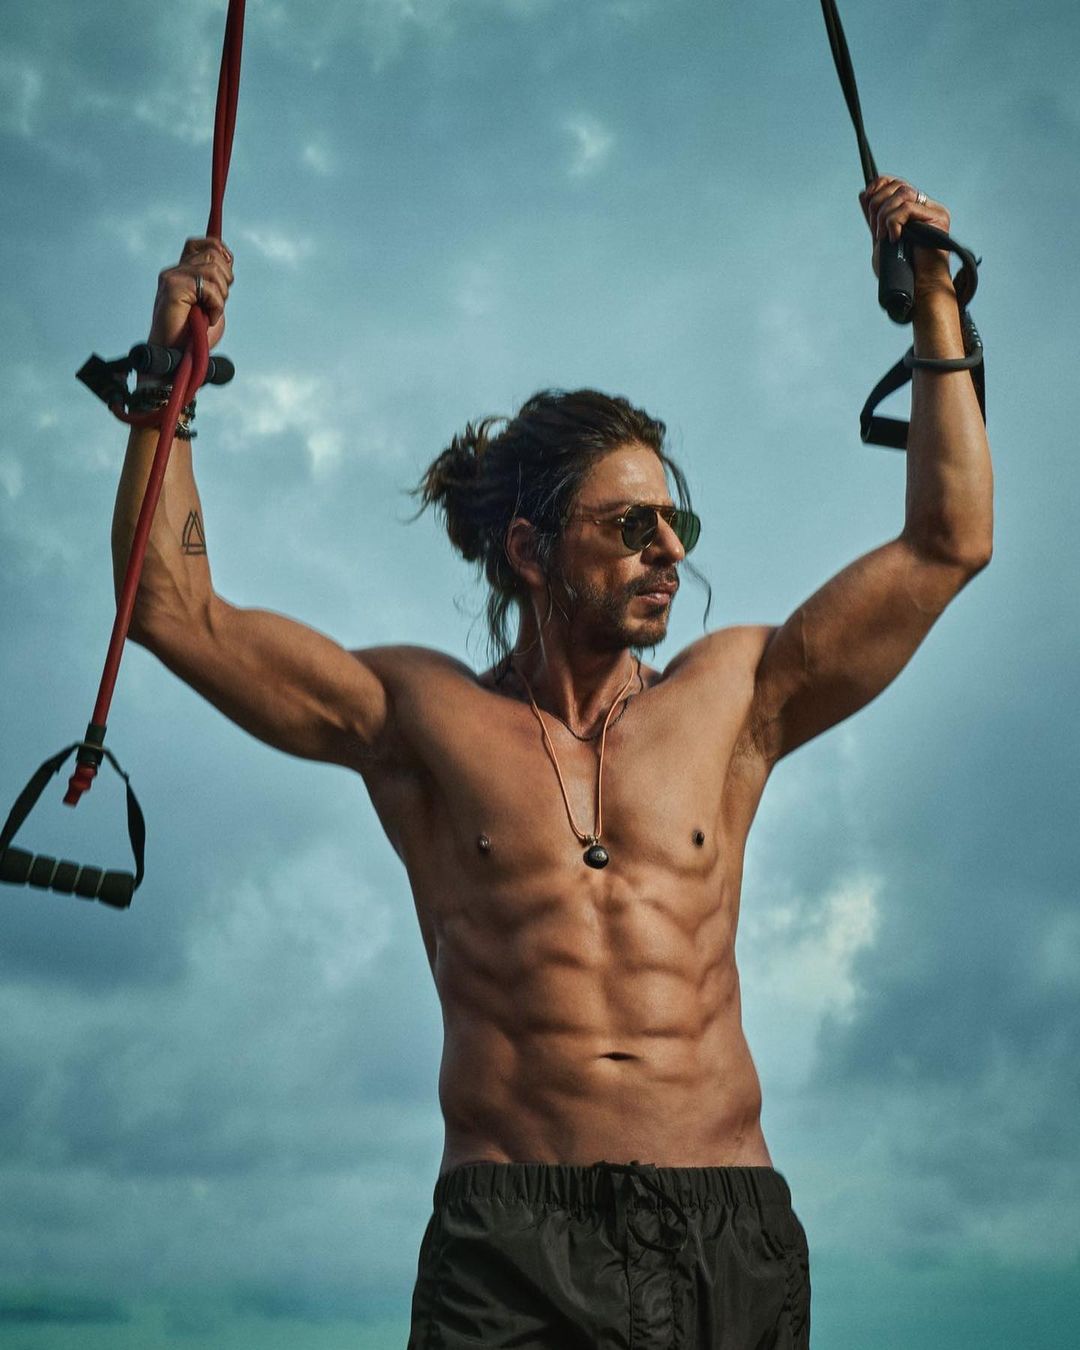 Shah Rukh Khan poses shirtless